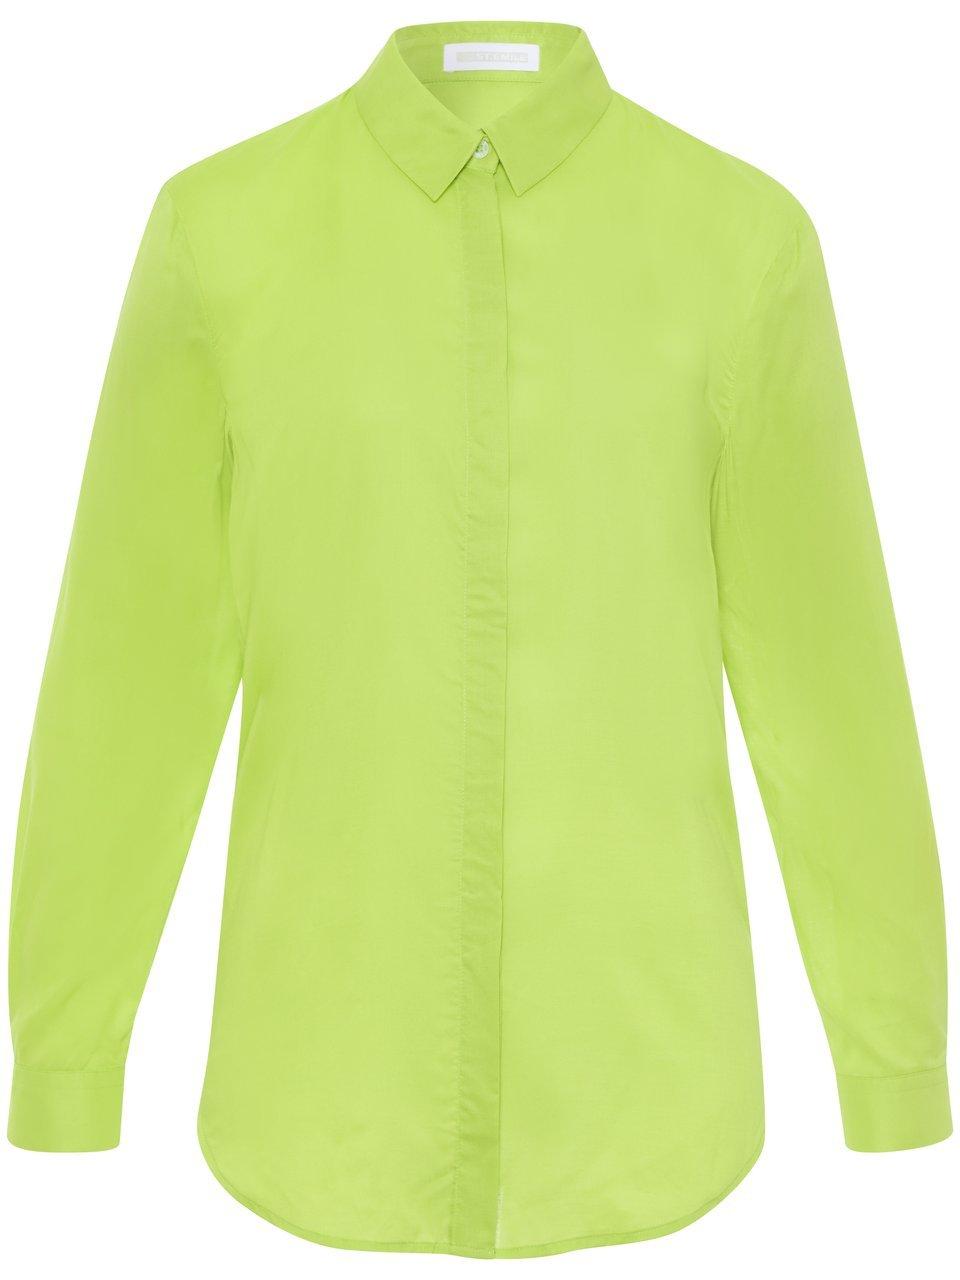 Lange blouse Van St. Emile groen